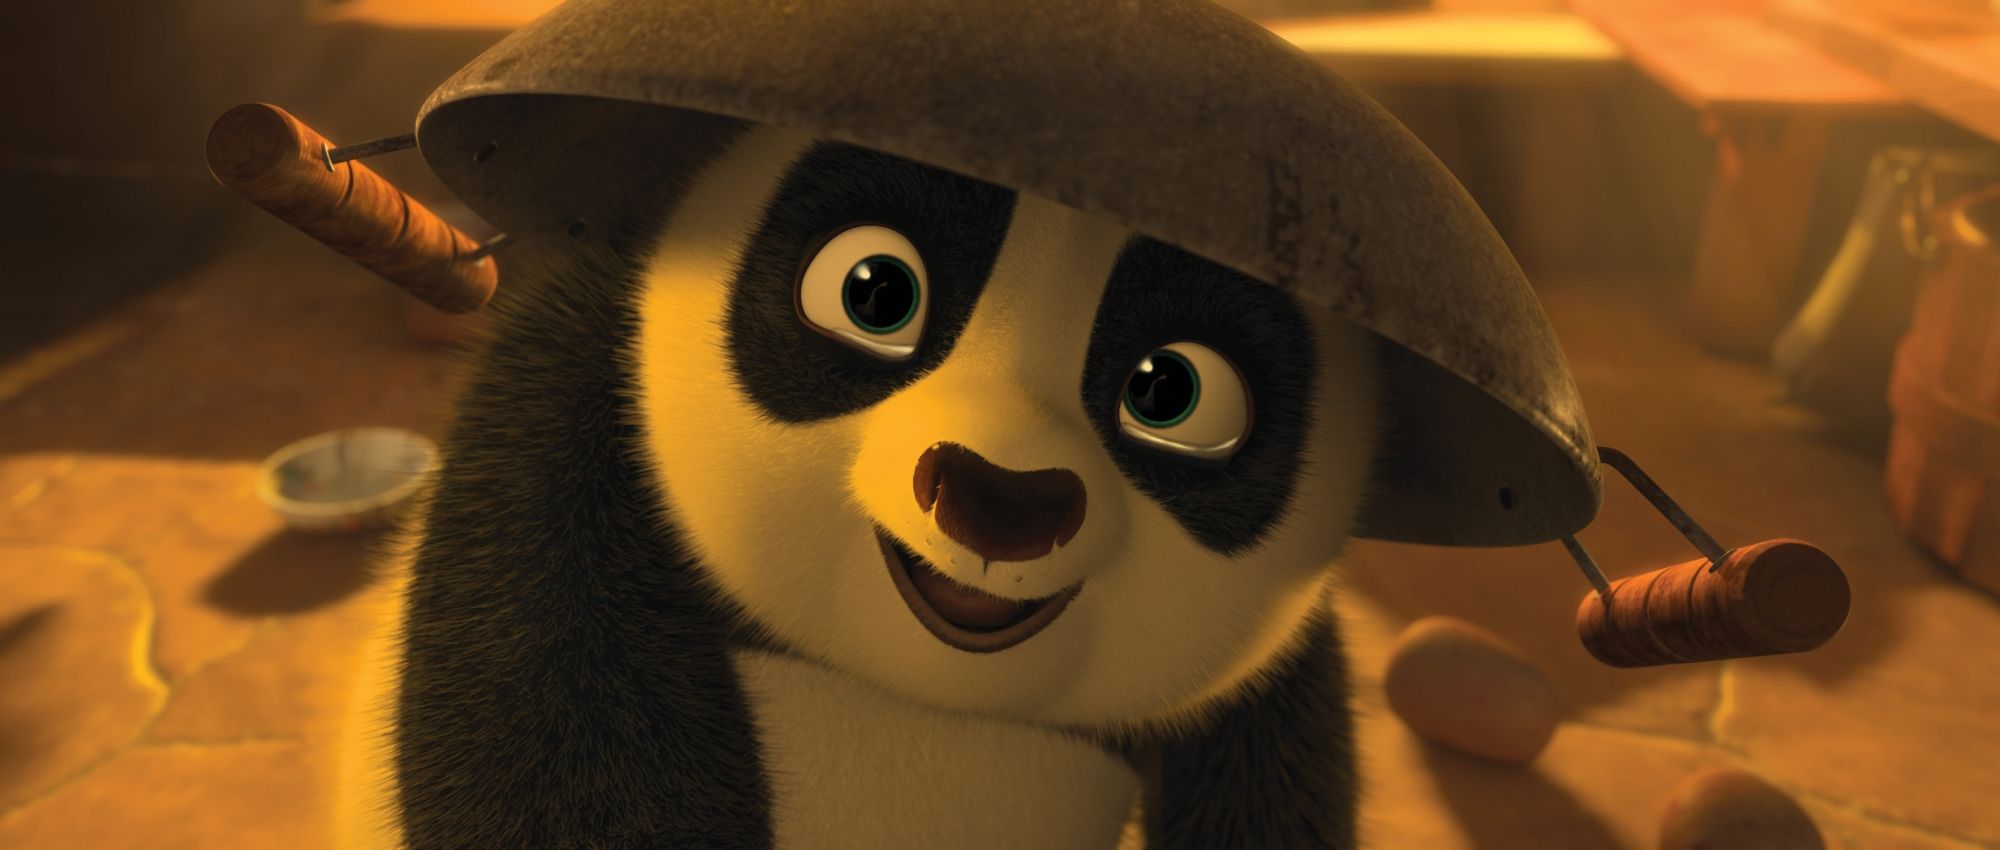 2011 Kung Fu Panda 2 Wallpapers HD Backgrounds